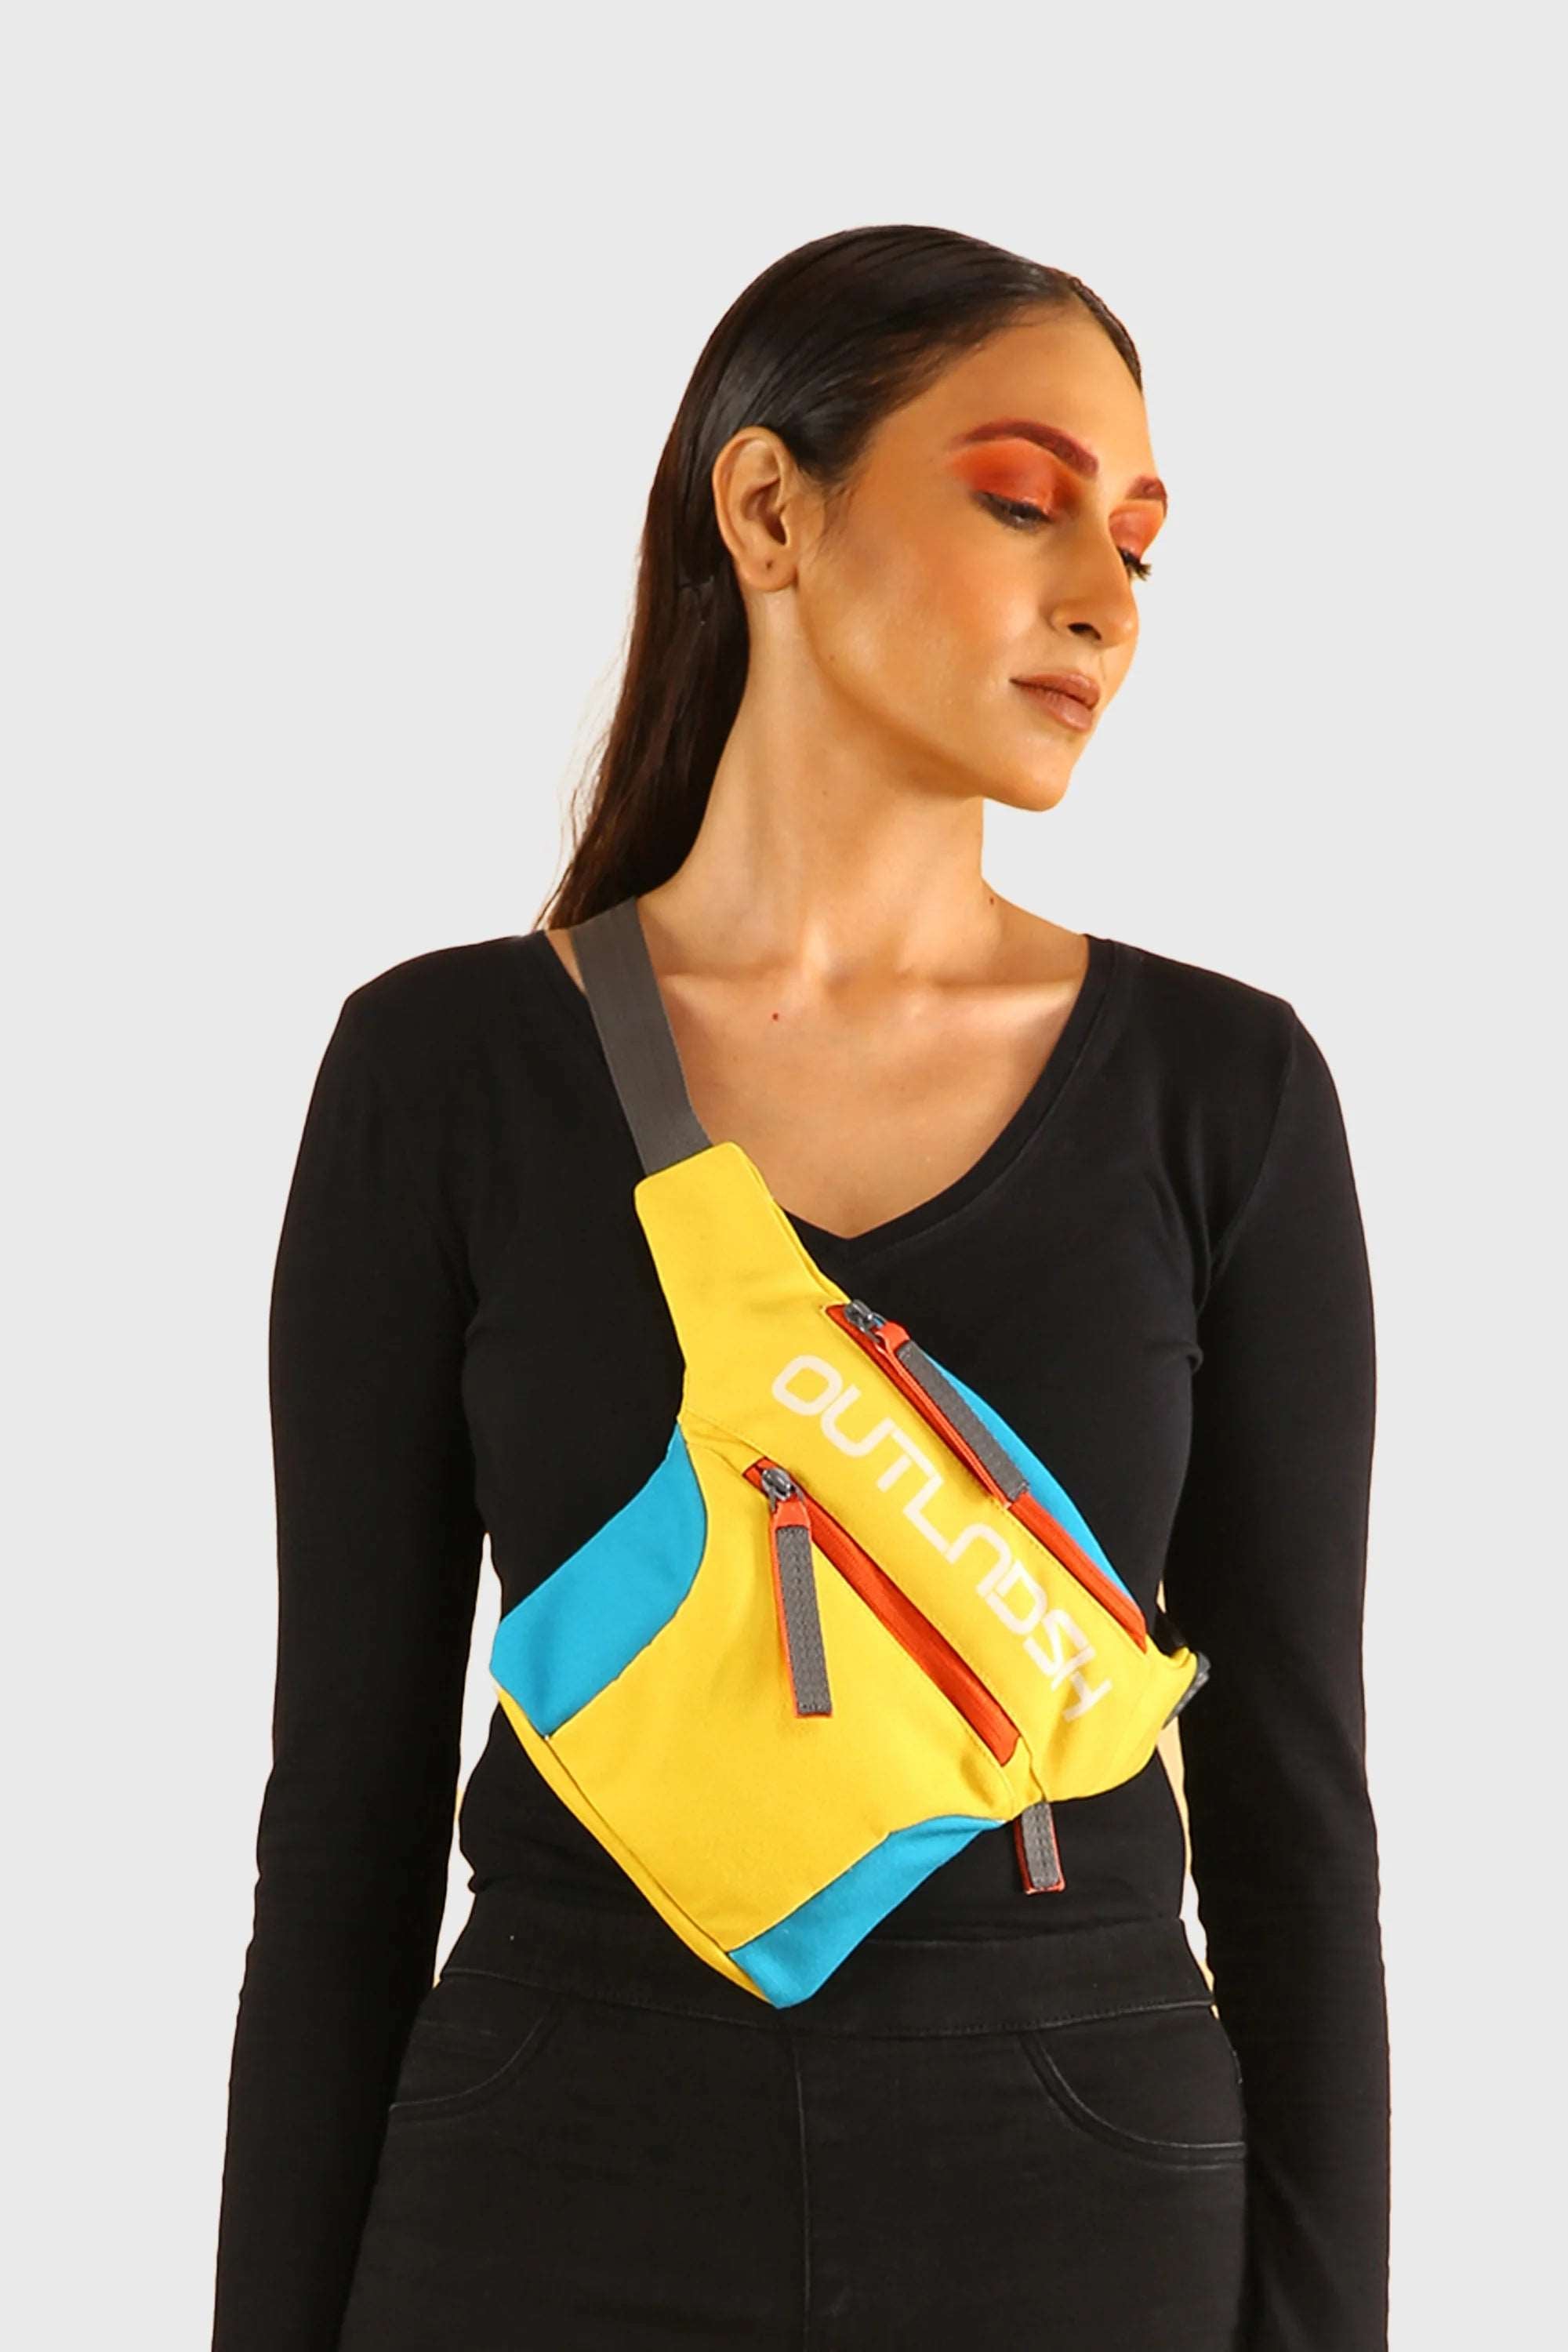 OUTLNDSH Fanny pack plus crossbody yellow color - waist bag, belt bag, sling bag, bum bag.